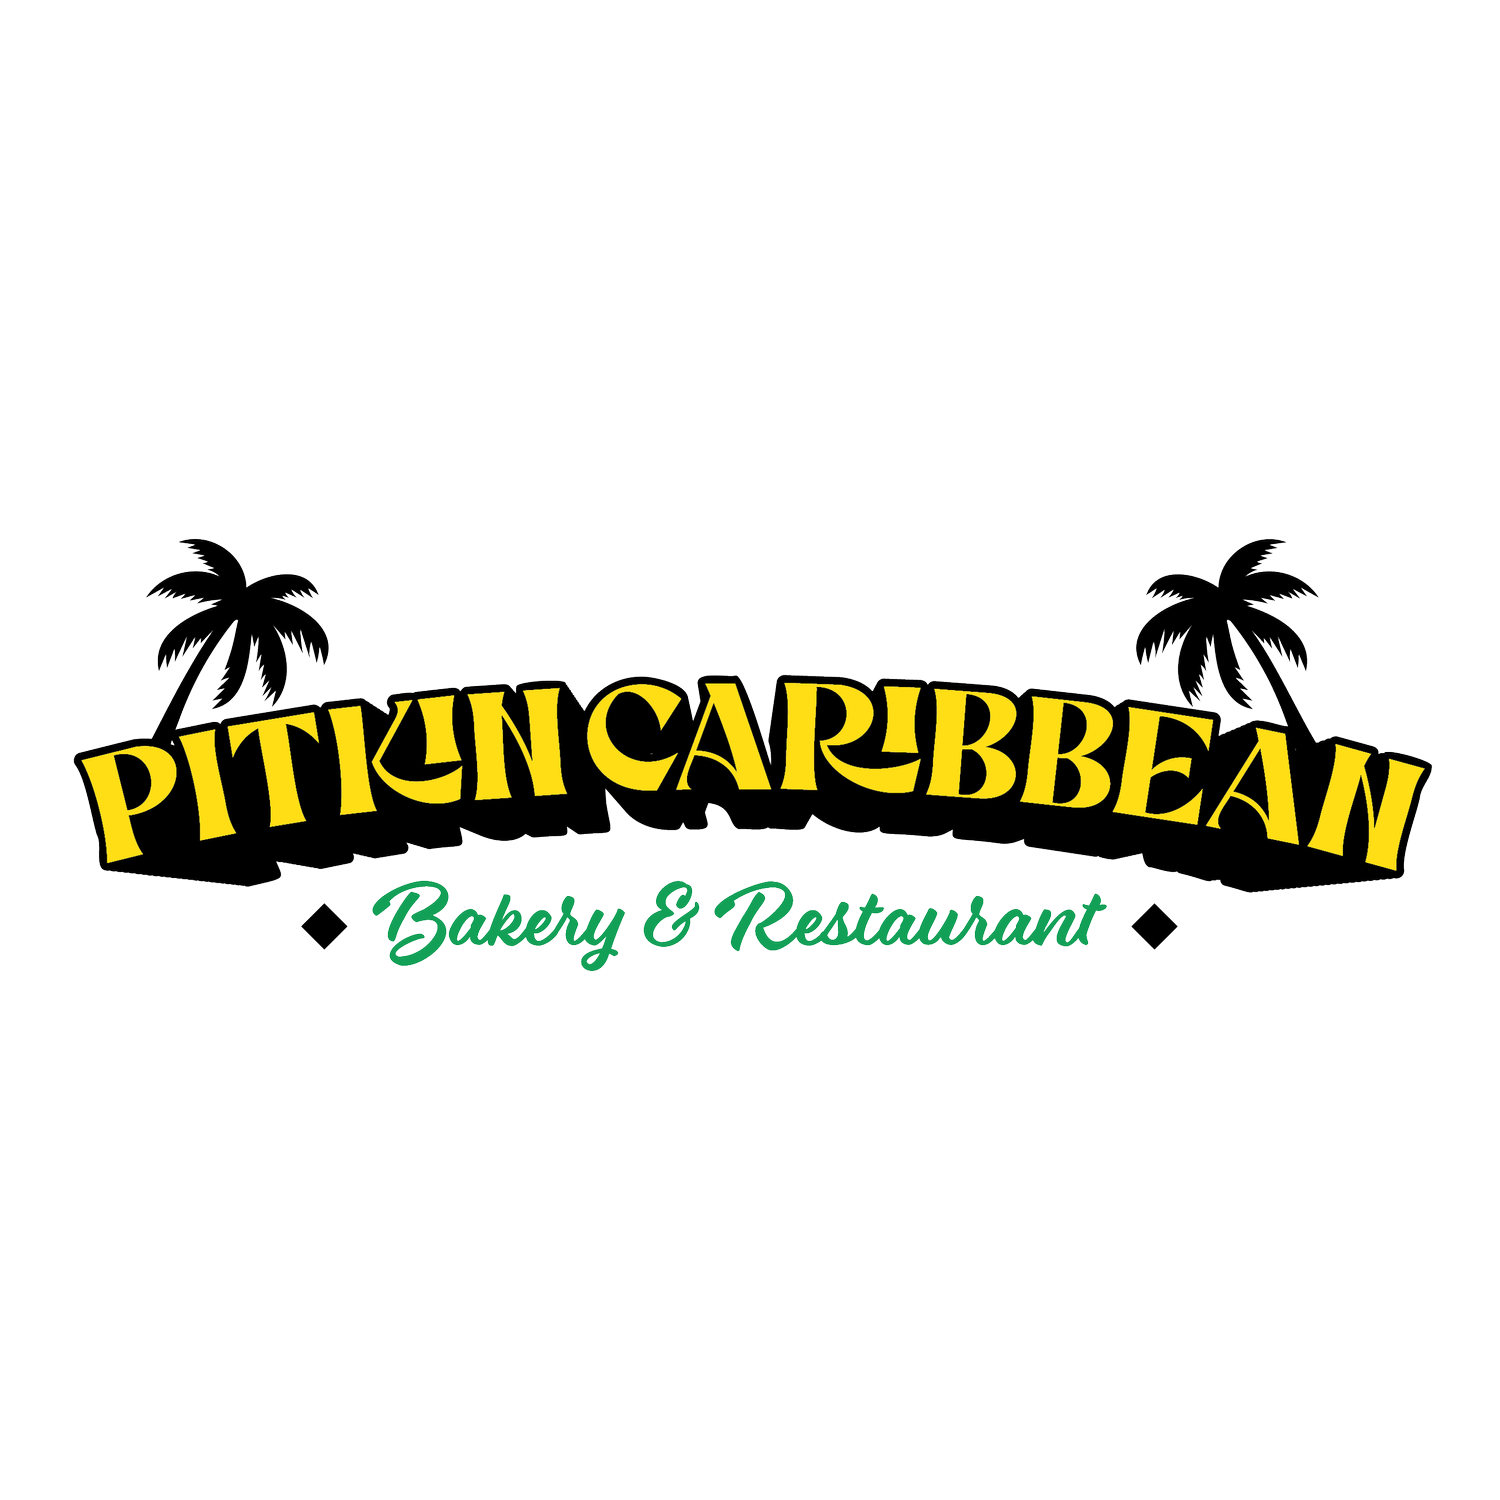 Pitkin Caribbean Bakery &amp; Restaurant